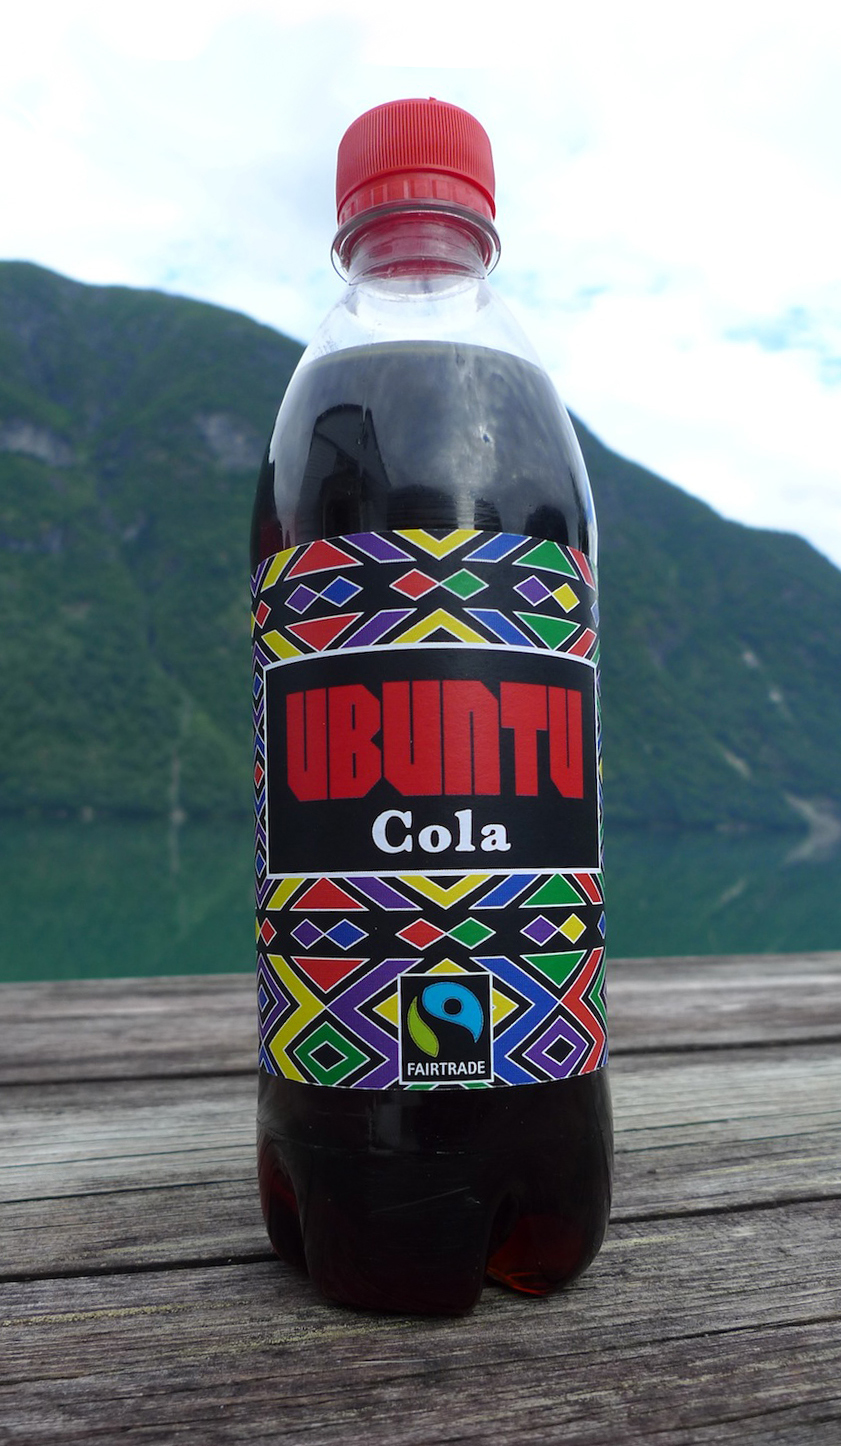 Ubuntu fairtrade cola soda pop bottle Pet plastic Label pattern